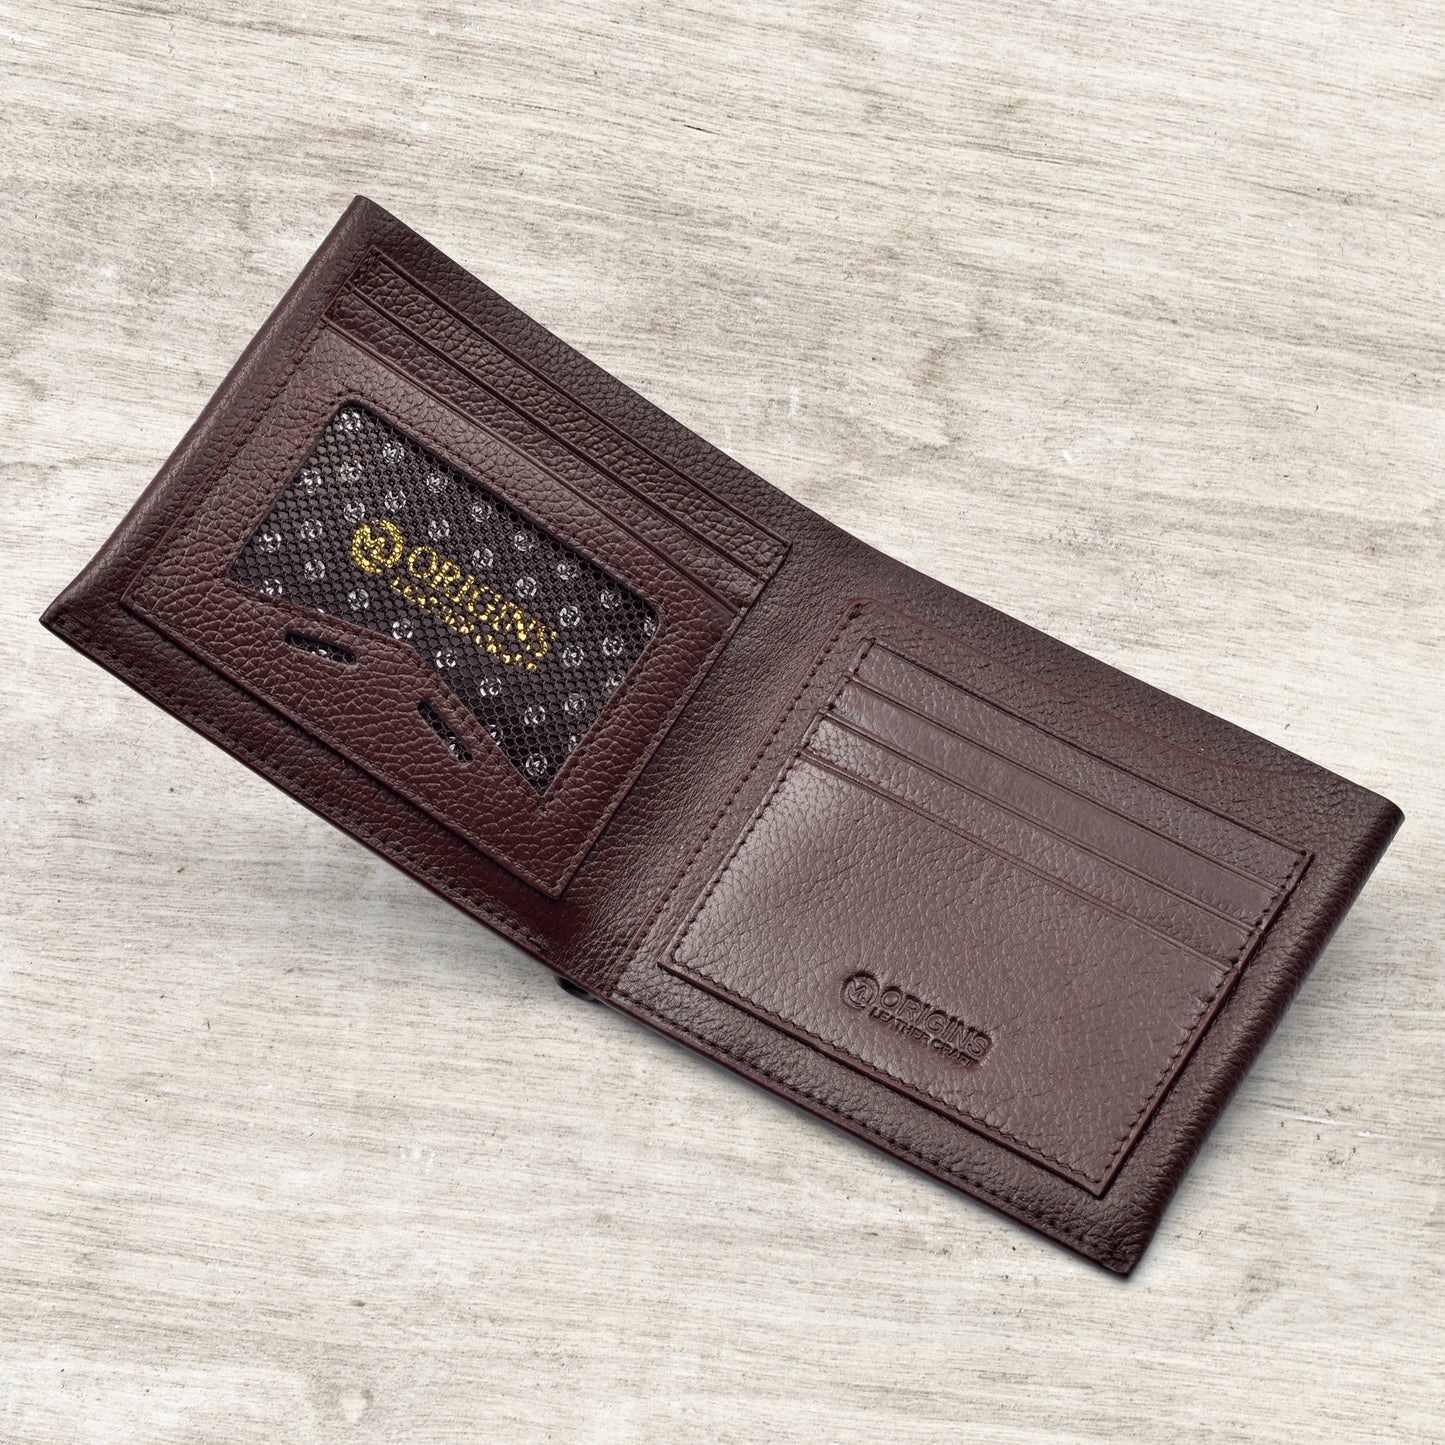 Pocket Size Premium Quality Leather Wallet for Men | ORGN Wallet 20